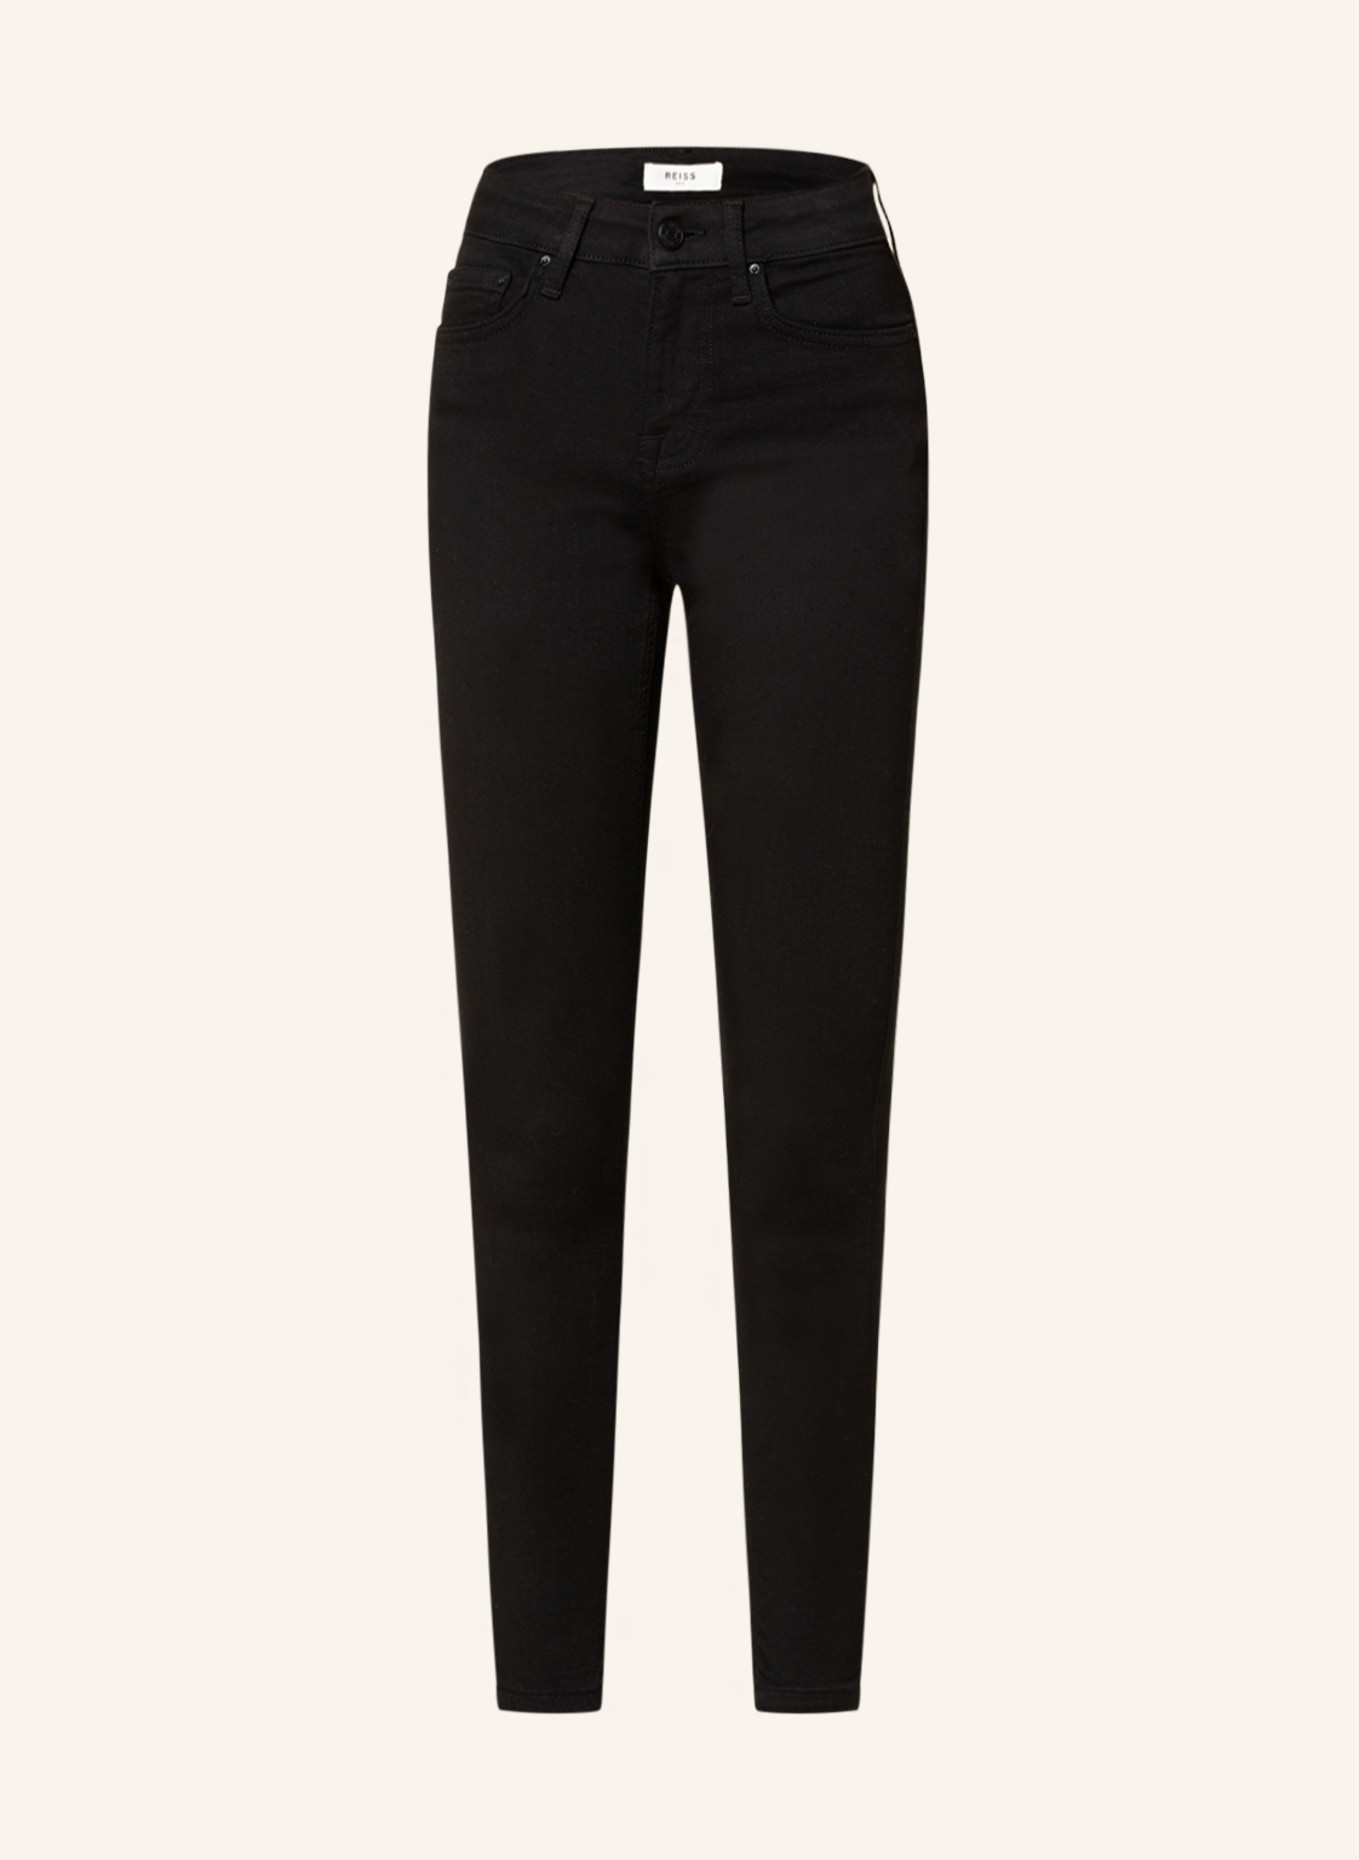 REISS Skinny Jeans LUX, Farbe: 20 BLACK (Bild 1)